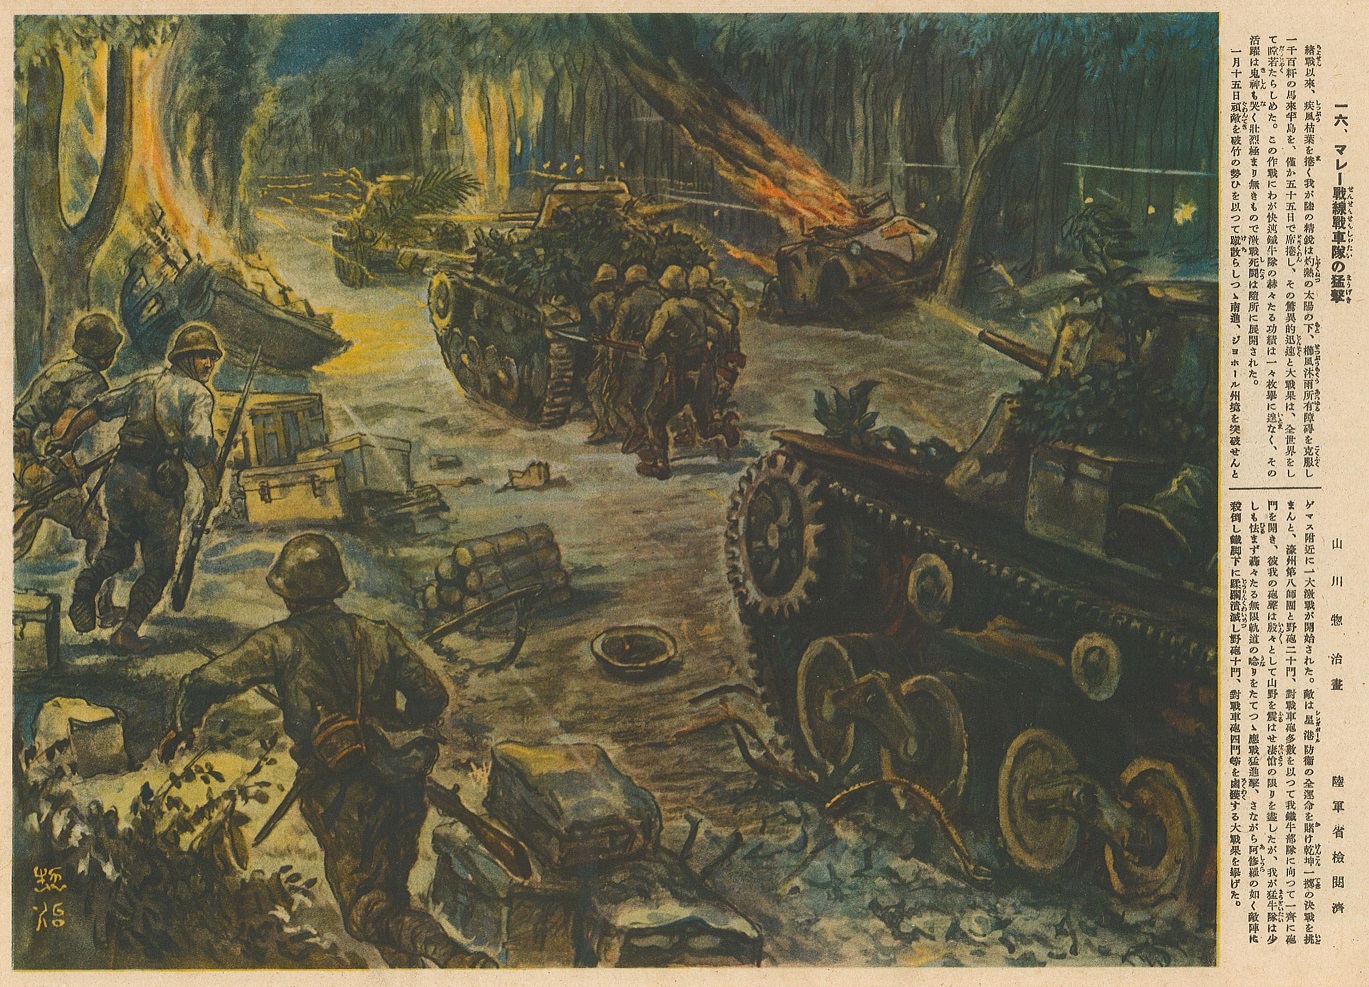 Artist impression of the Parit Sulong Massacre. Image via Australian War Memorial.